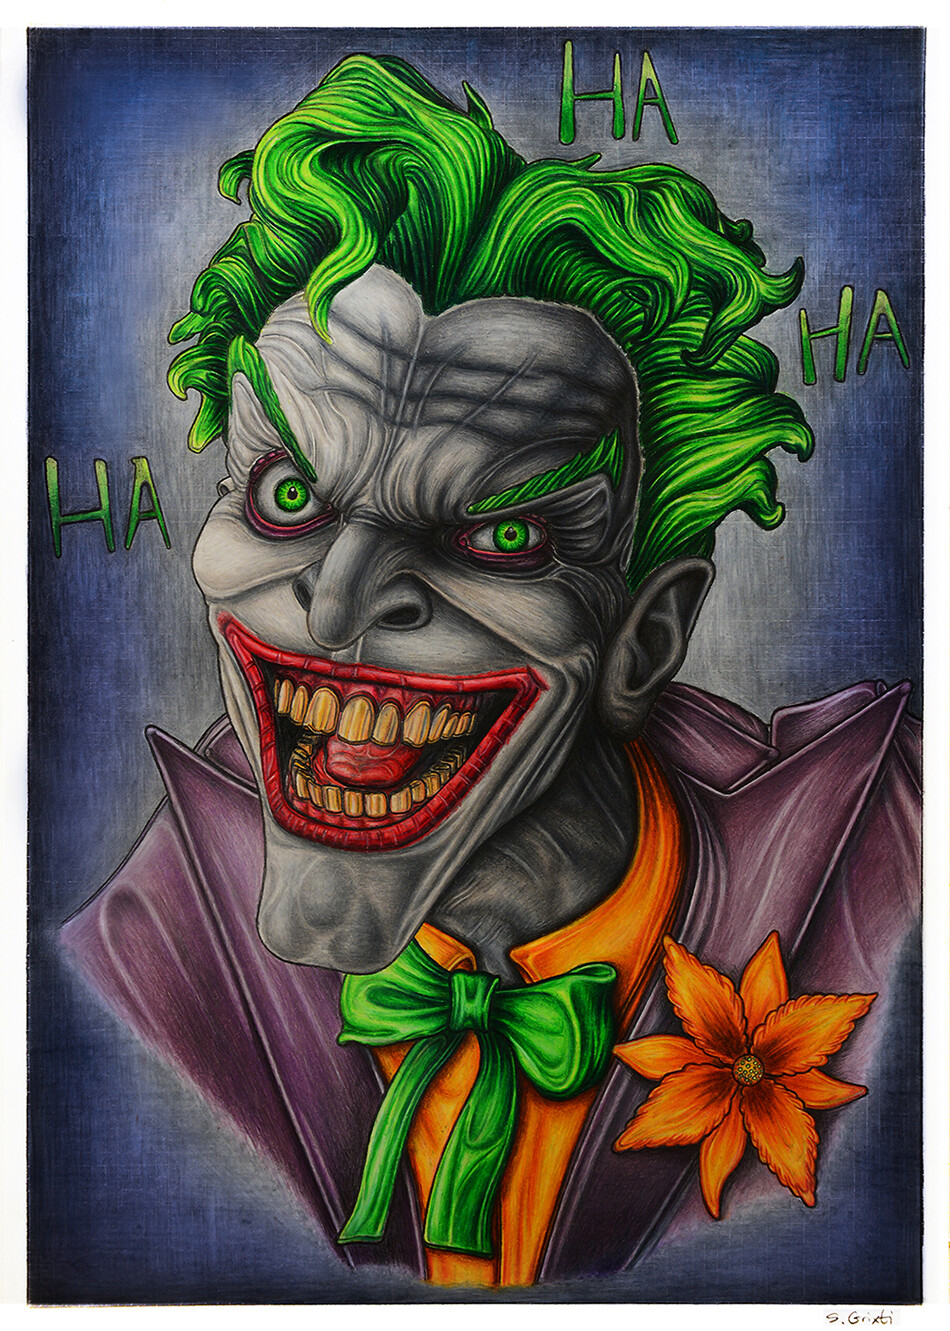 ArtStation - The Crazy Joker portrait drawing